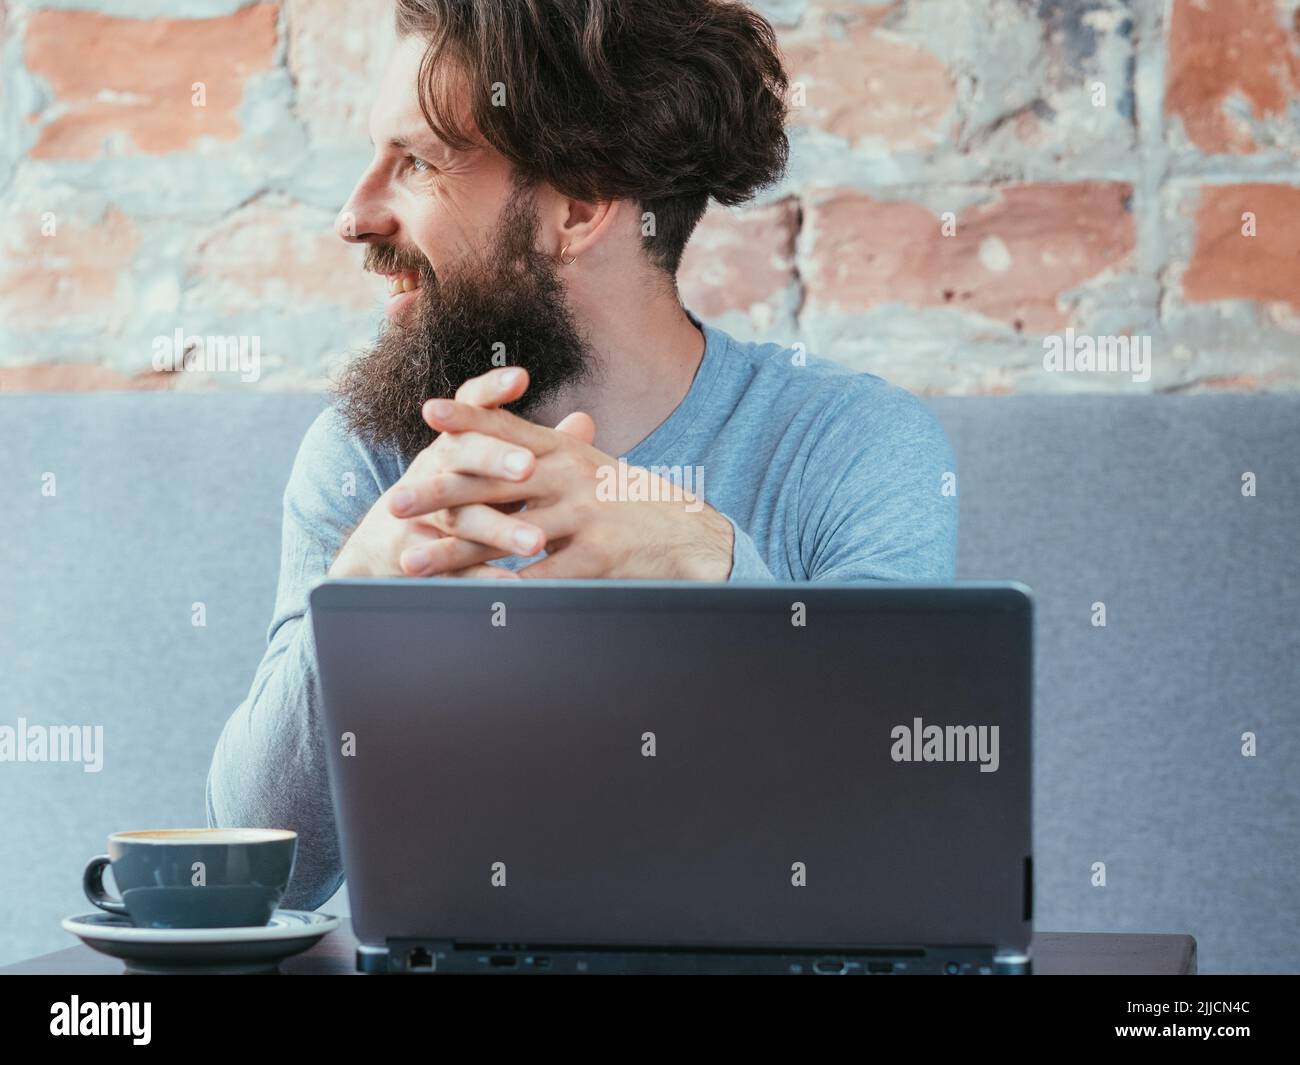 man cafe laptop coffee cup blogging social media Stock Photo